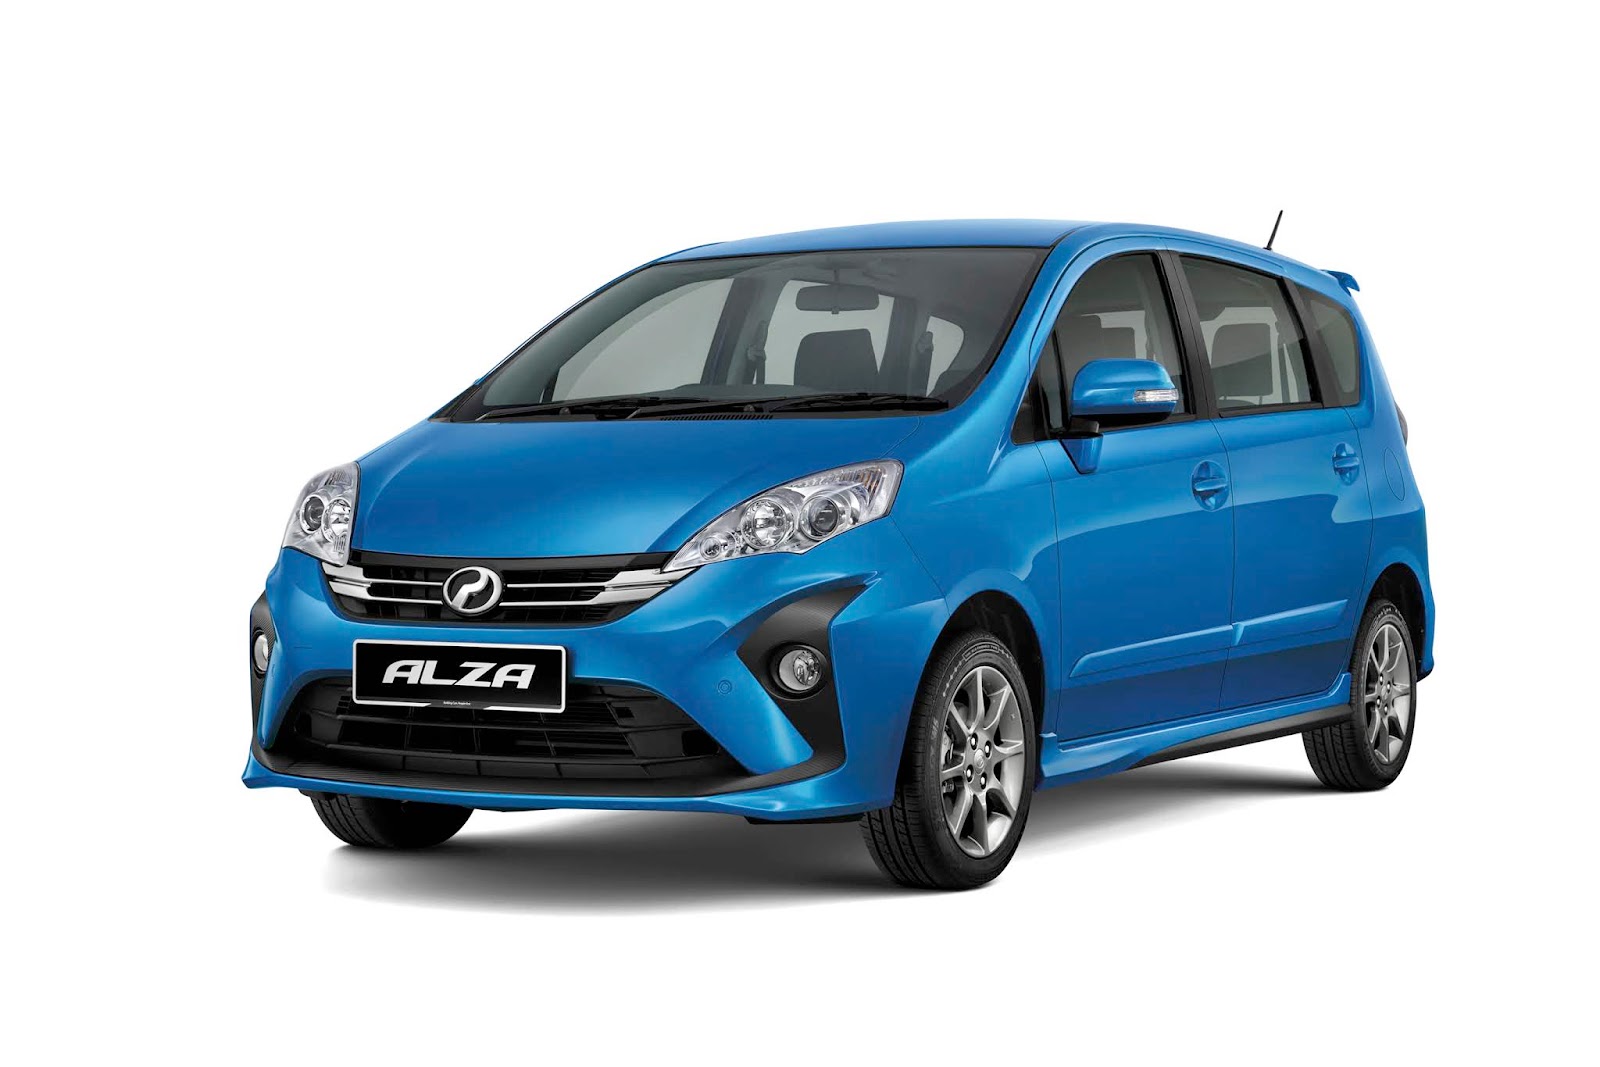 Motoring-Malaysia: The Perodua Alza Gets A Facelift & More 